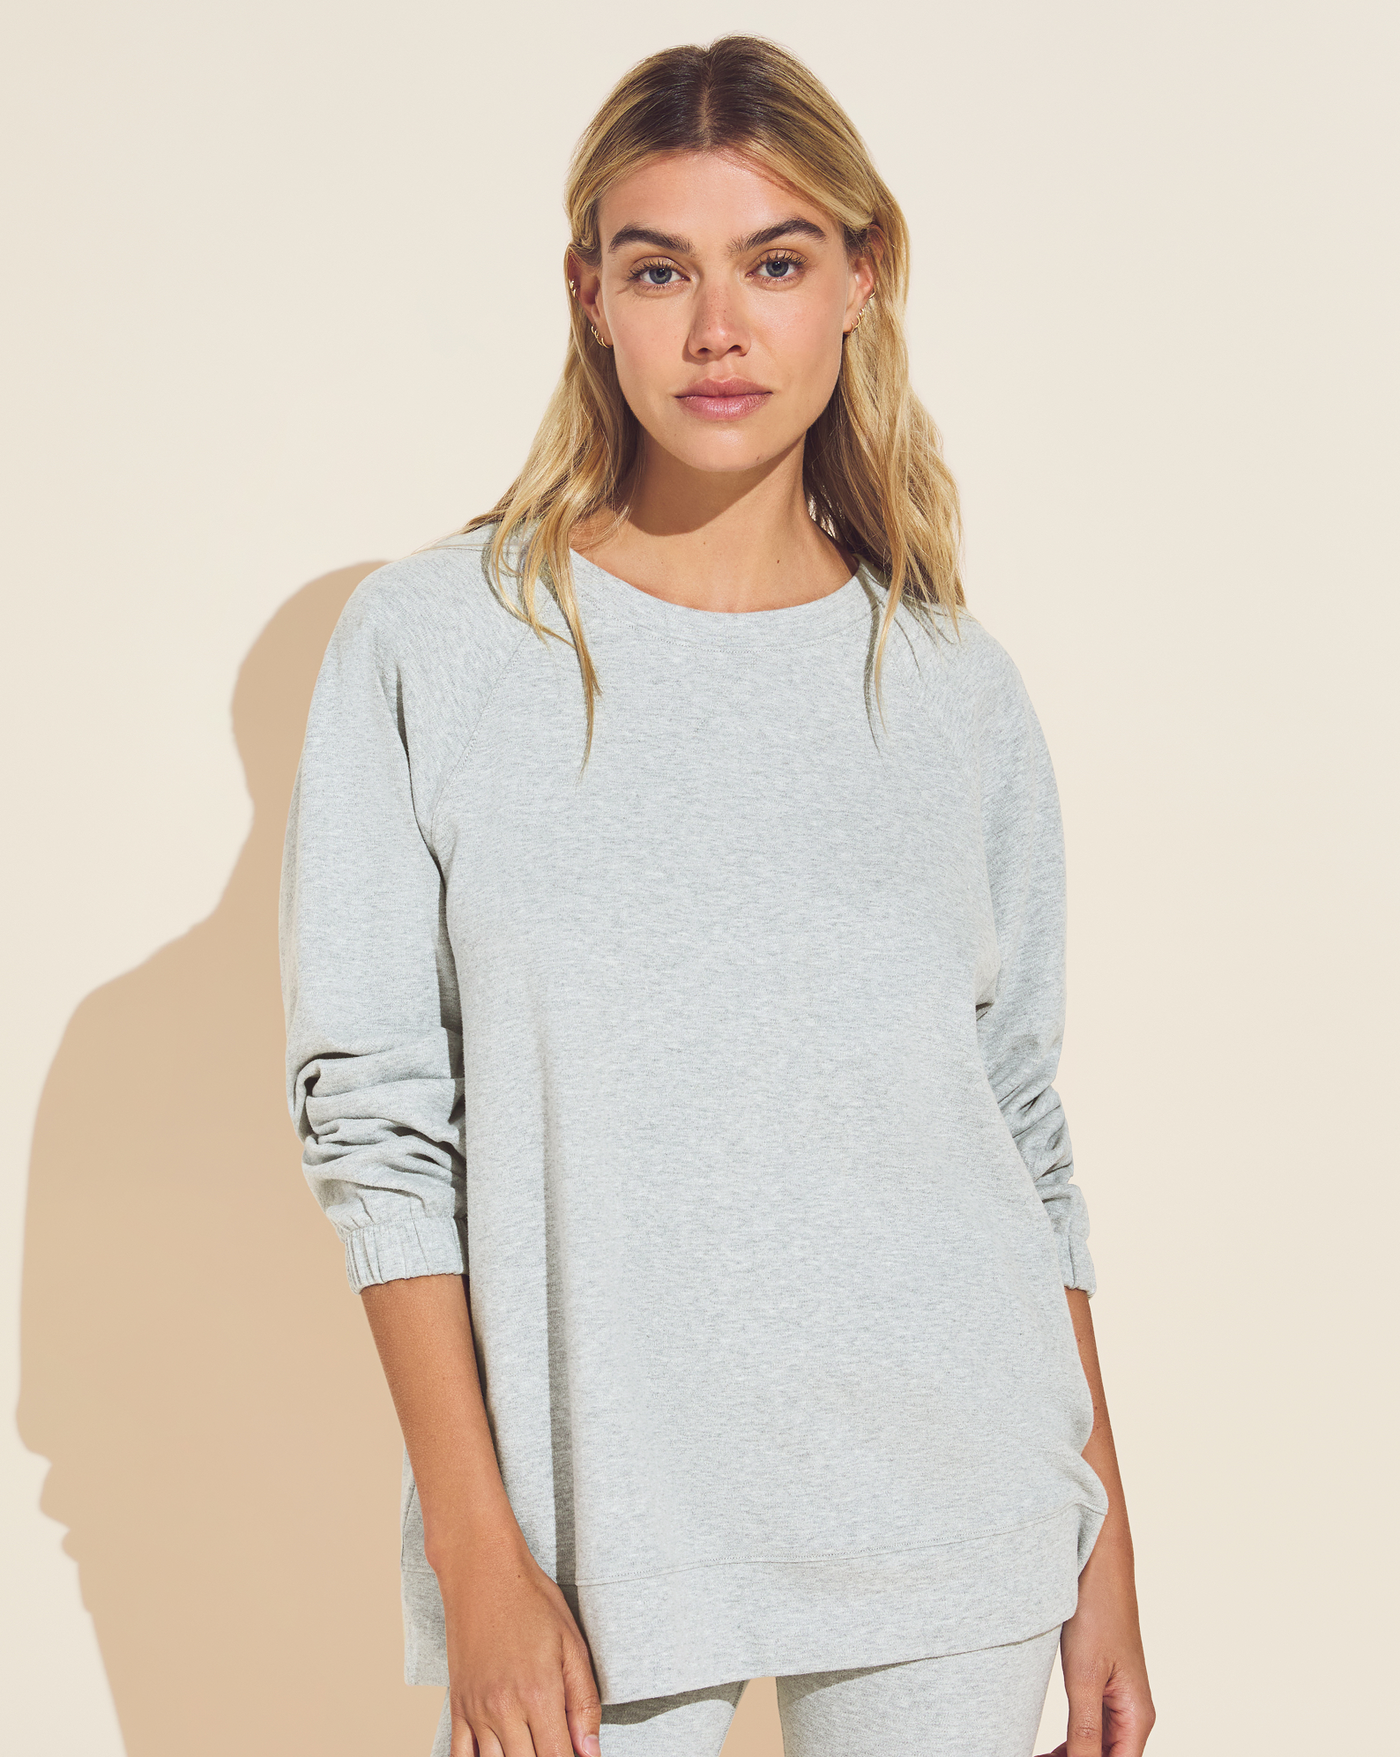 Luxe Sweats Sweatshirt and Jogger Set: Size S